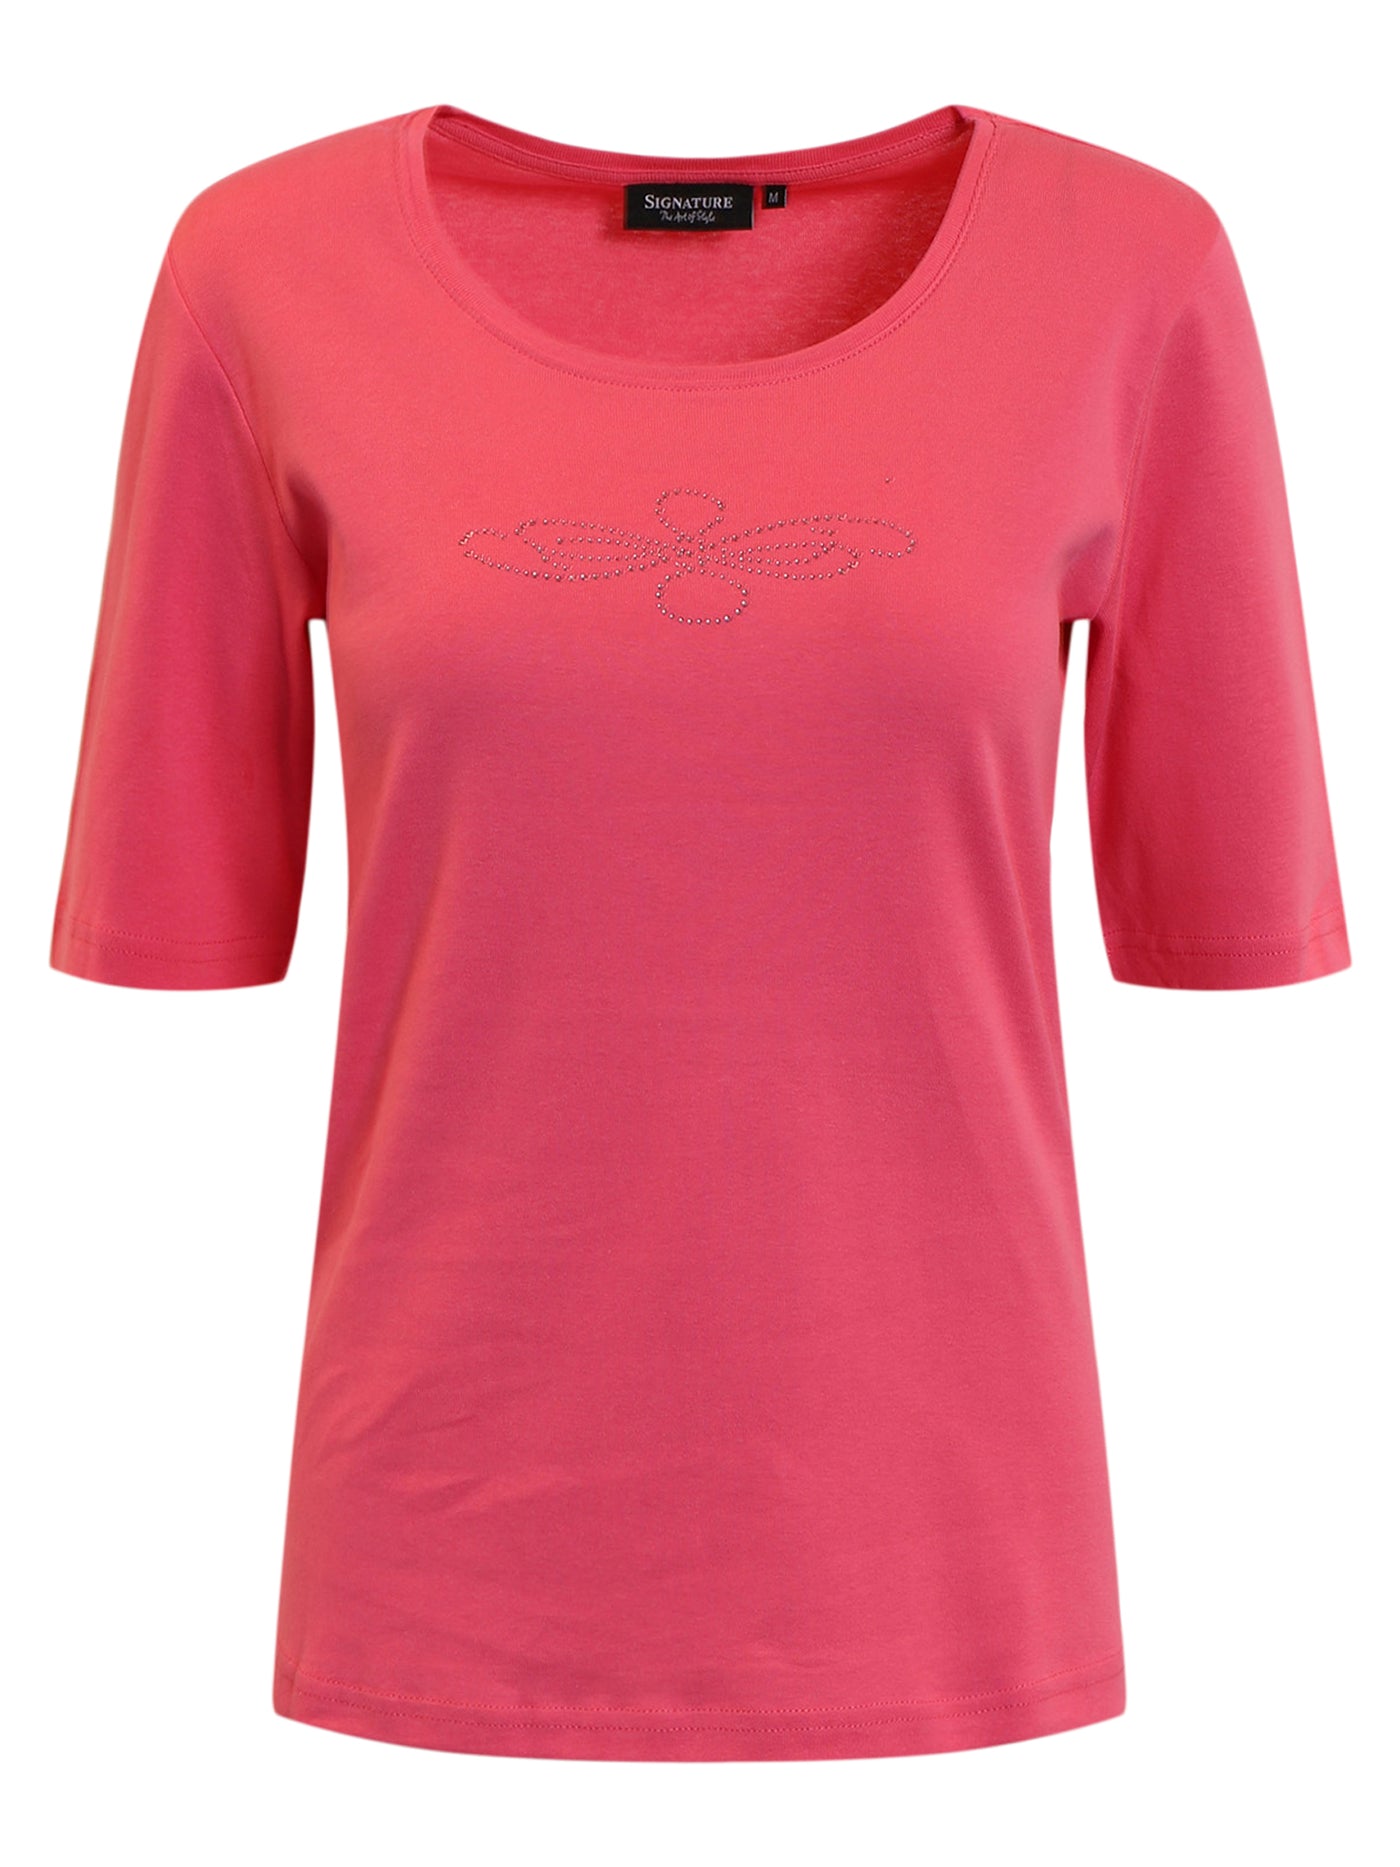 T-shirt - Pink